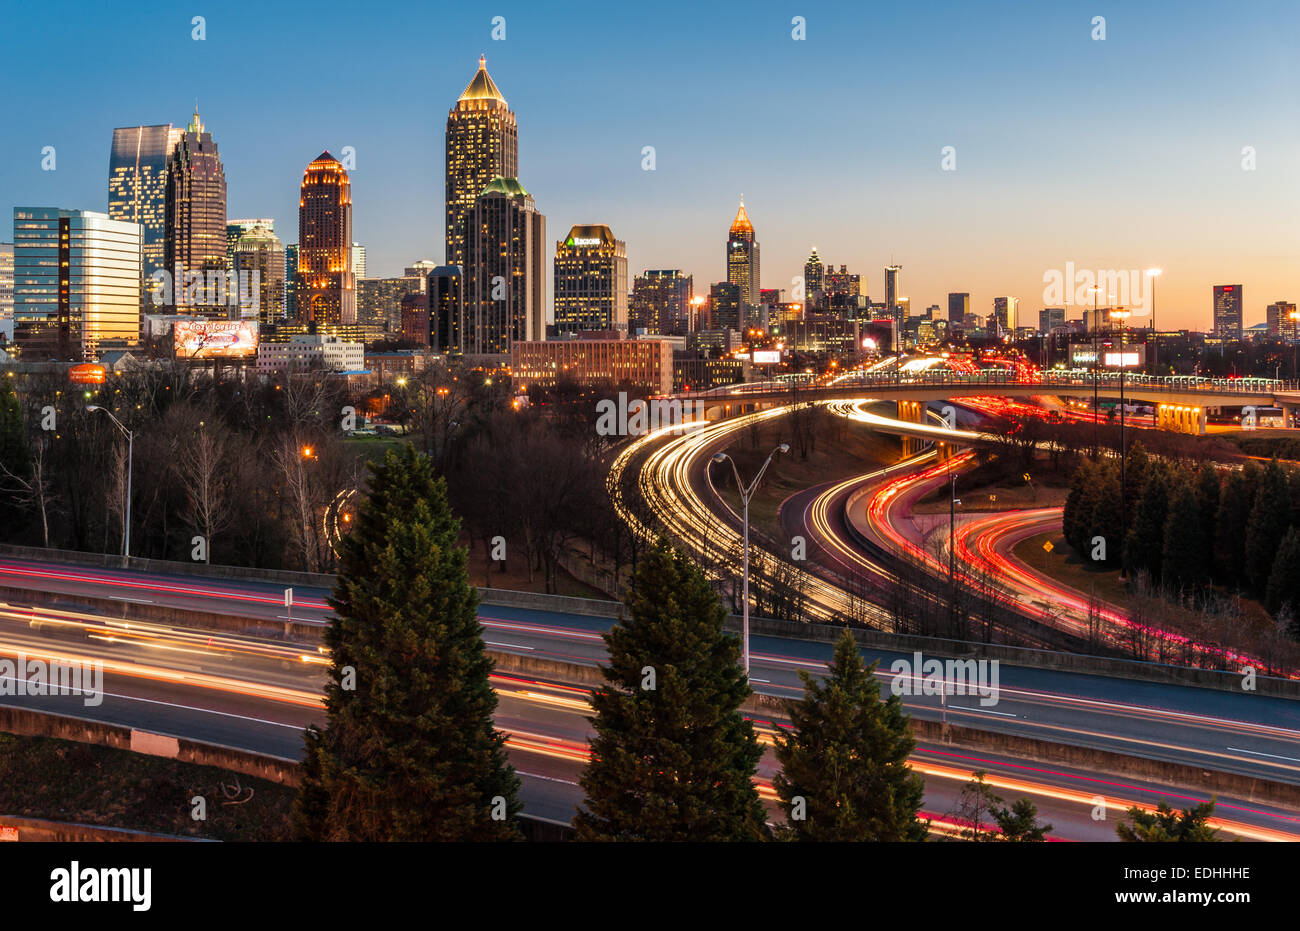 Atlanta city skyline and Interstate traffic aglow in the colors of sunset. Atlanta, Georgia, USA. Stock Photo